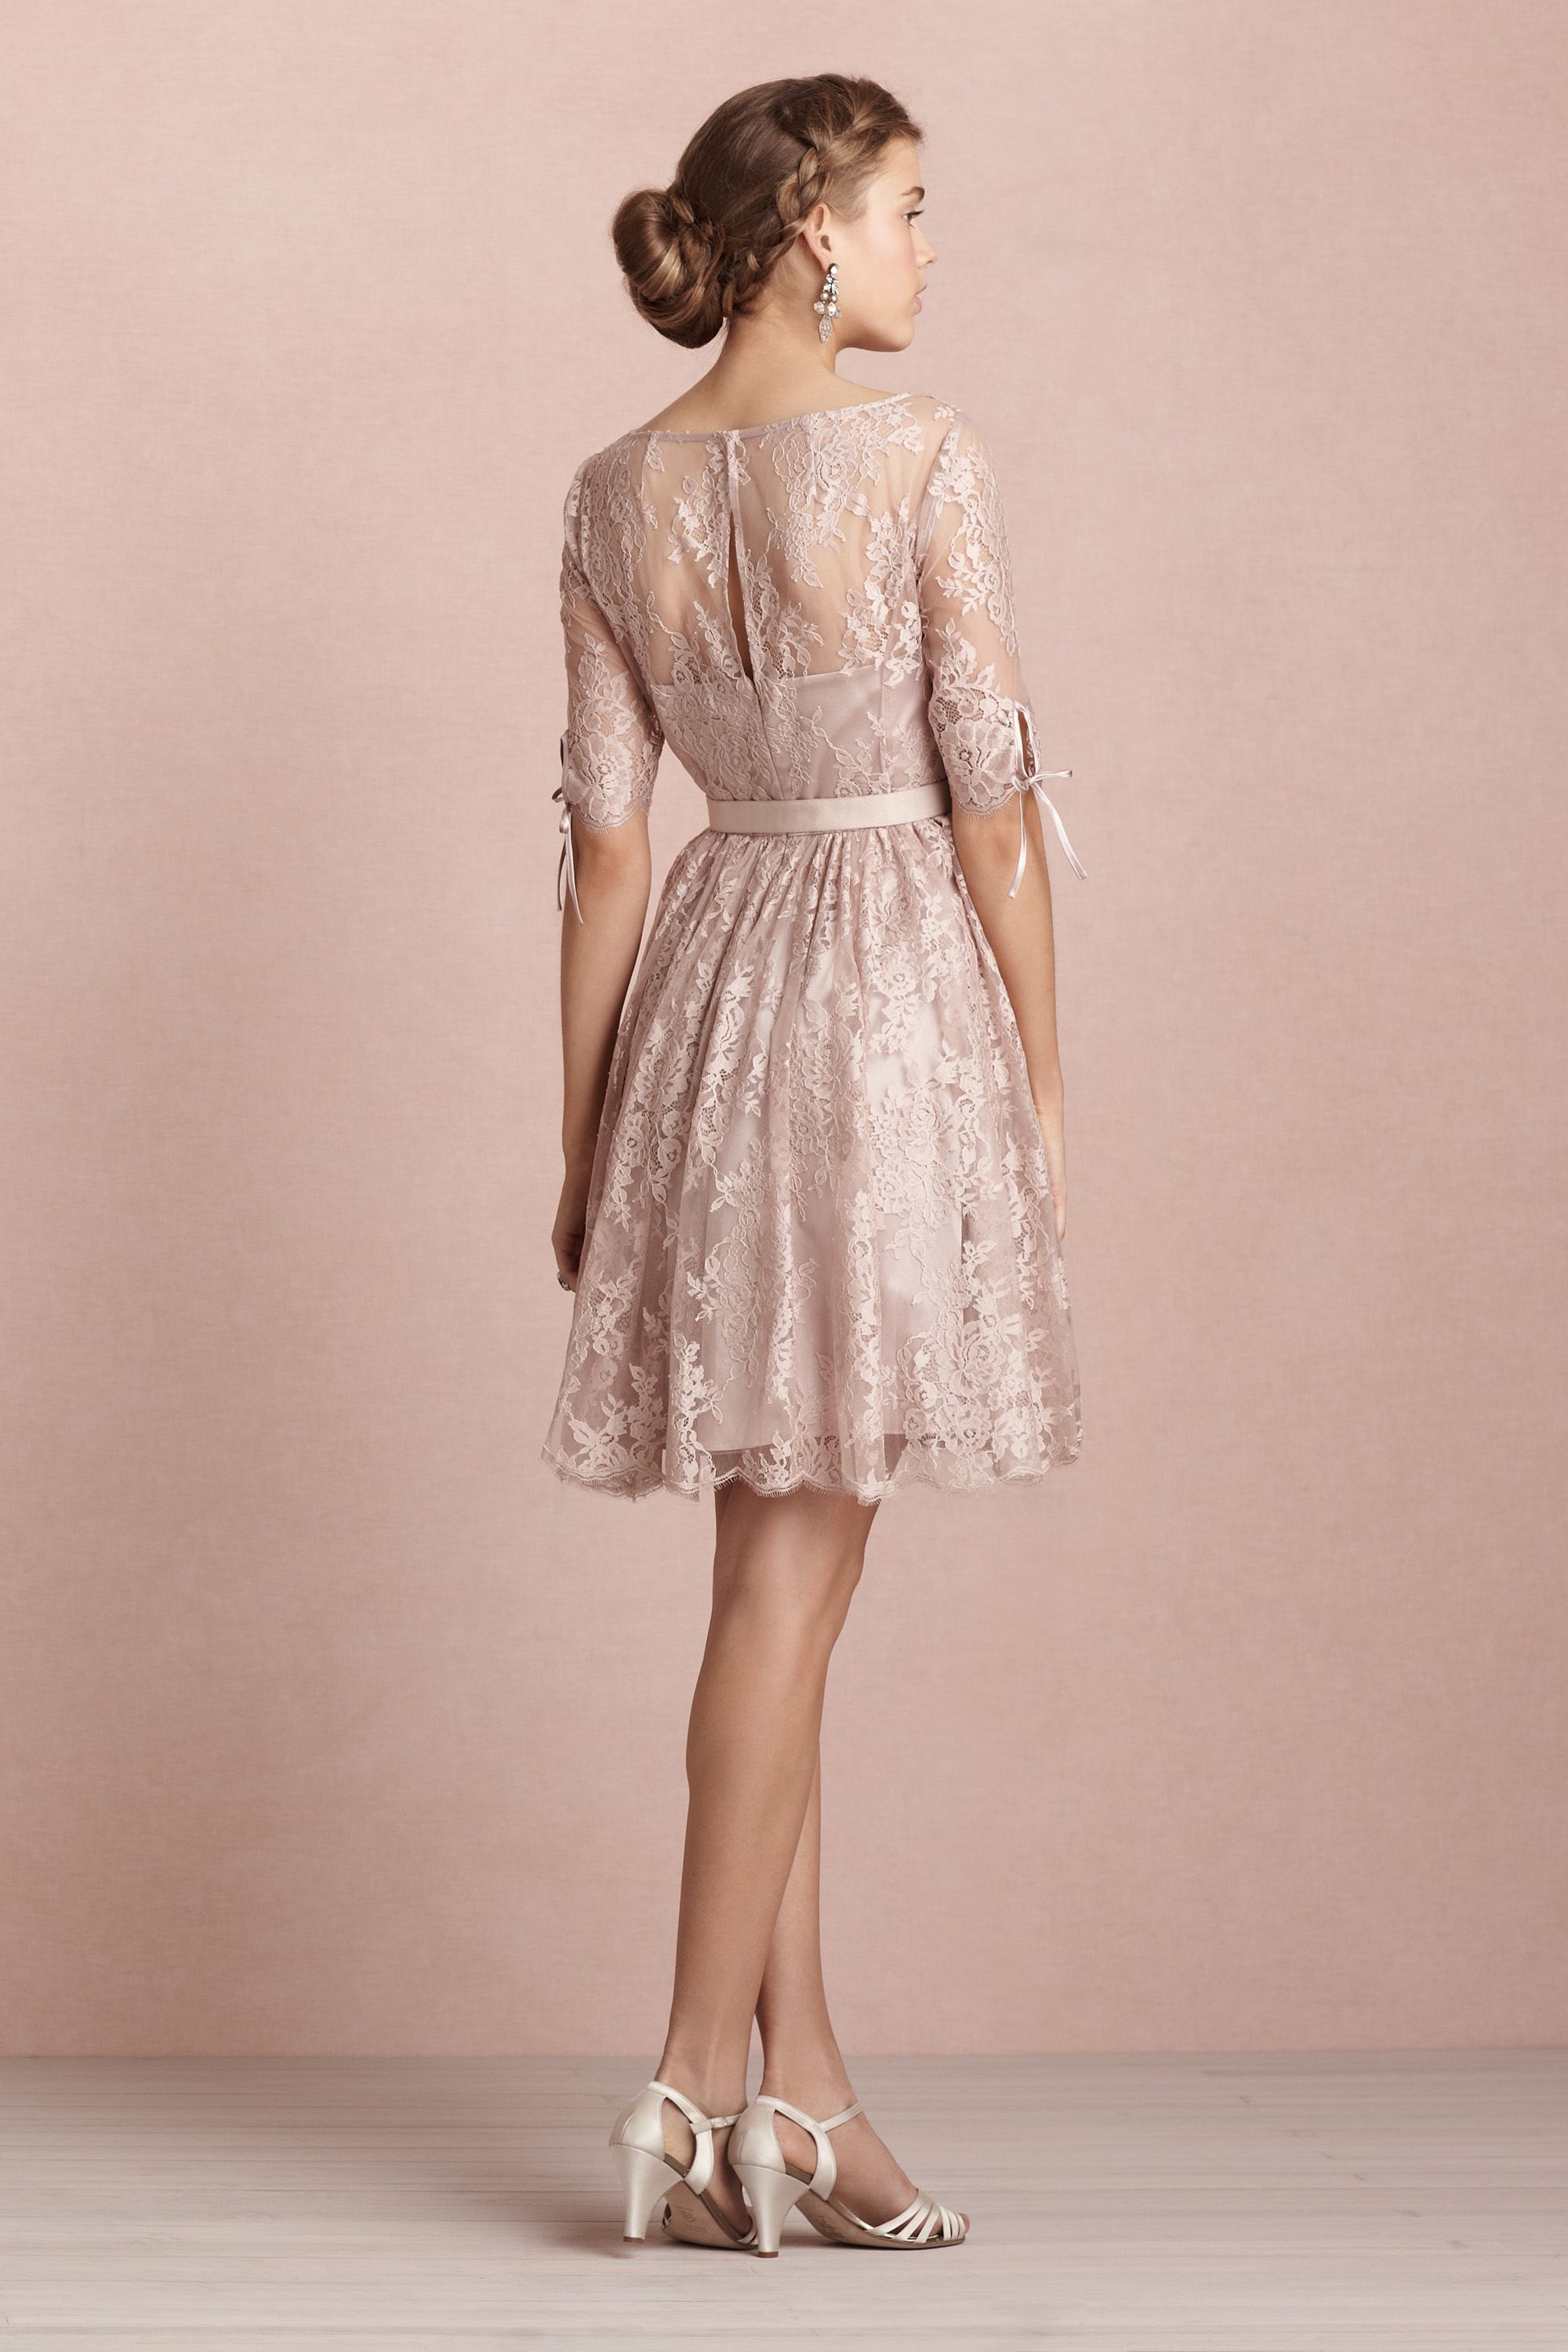 Tea Rose Dress in Bride | BHLDN